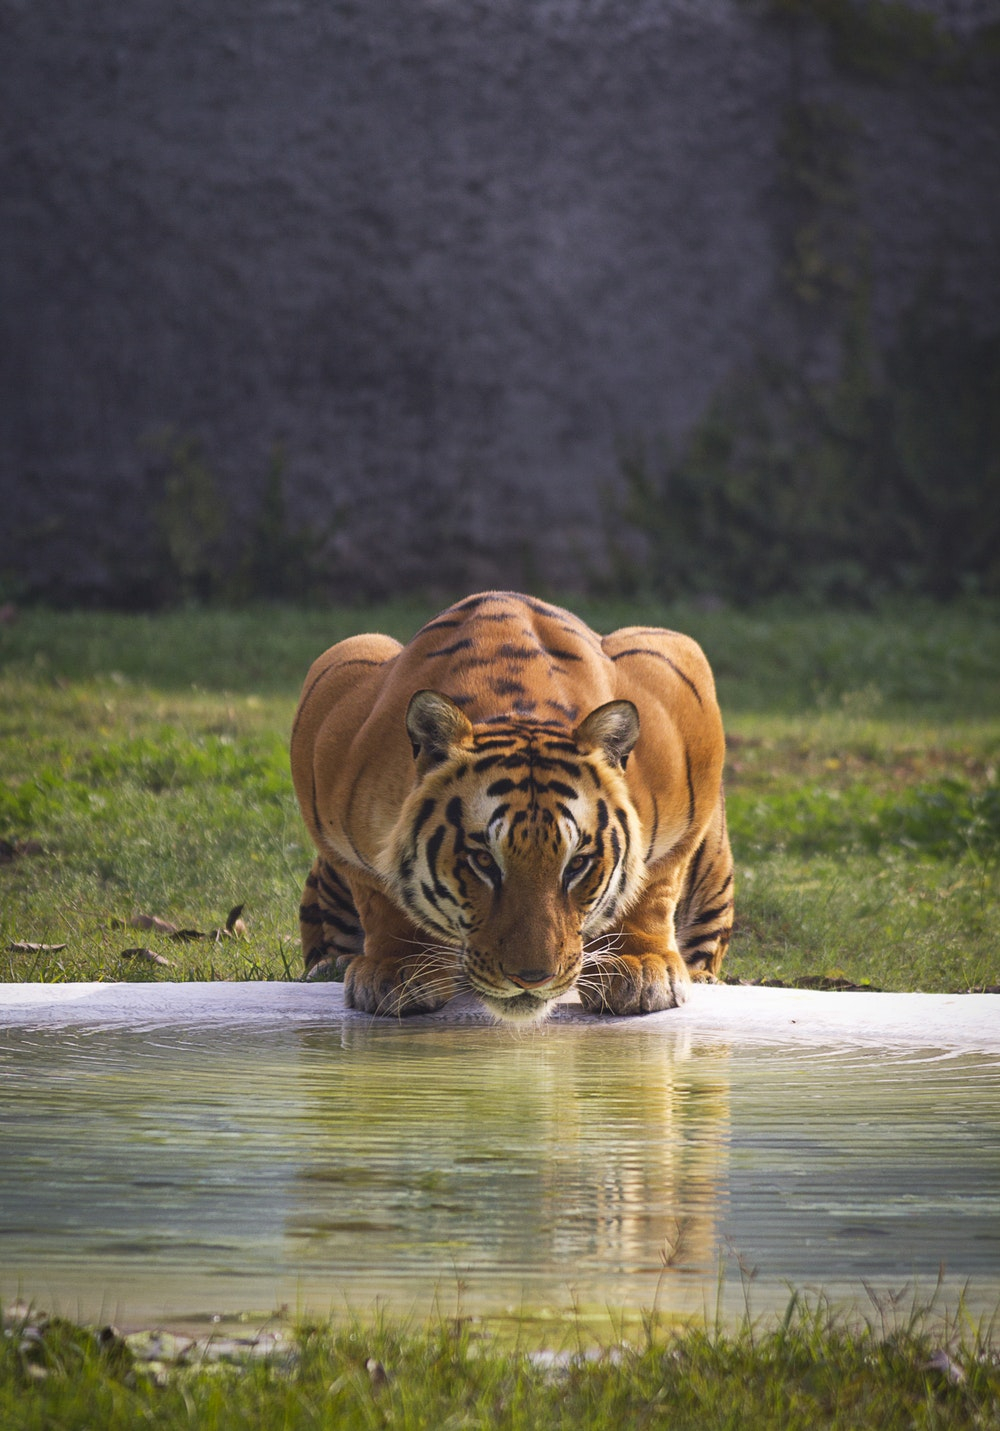 Tiger Hd Photos Free Download - Tiger Drinking Water - HD Wallpaper 